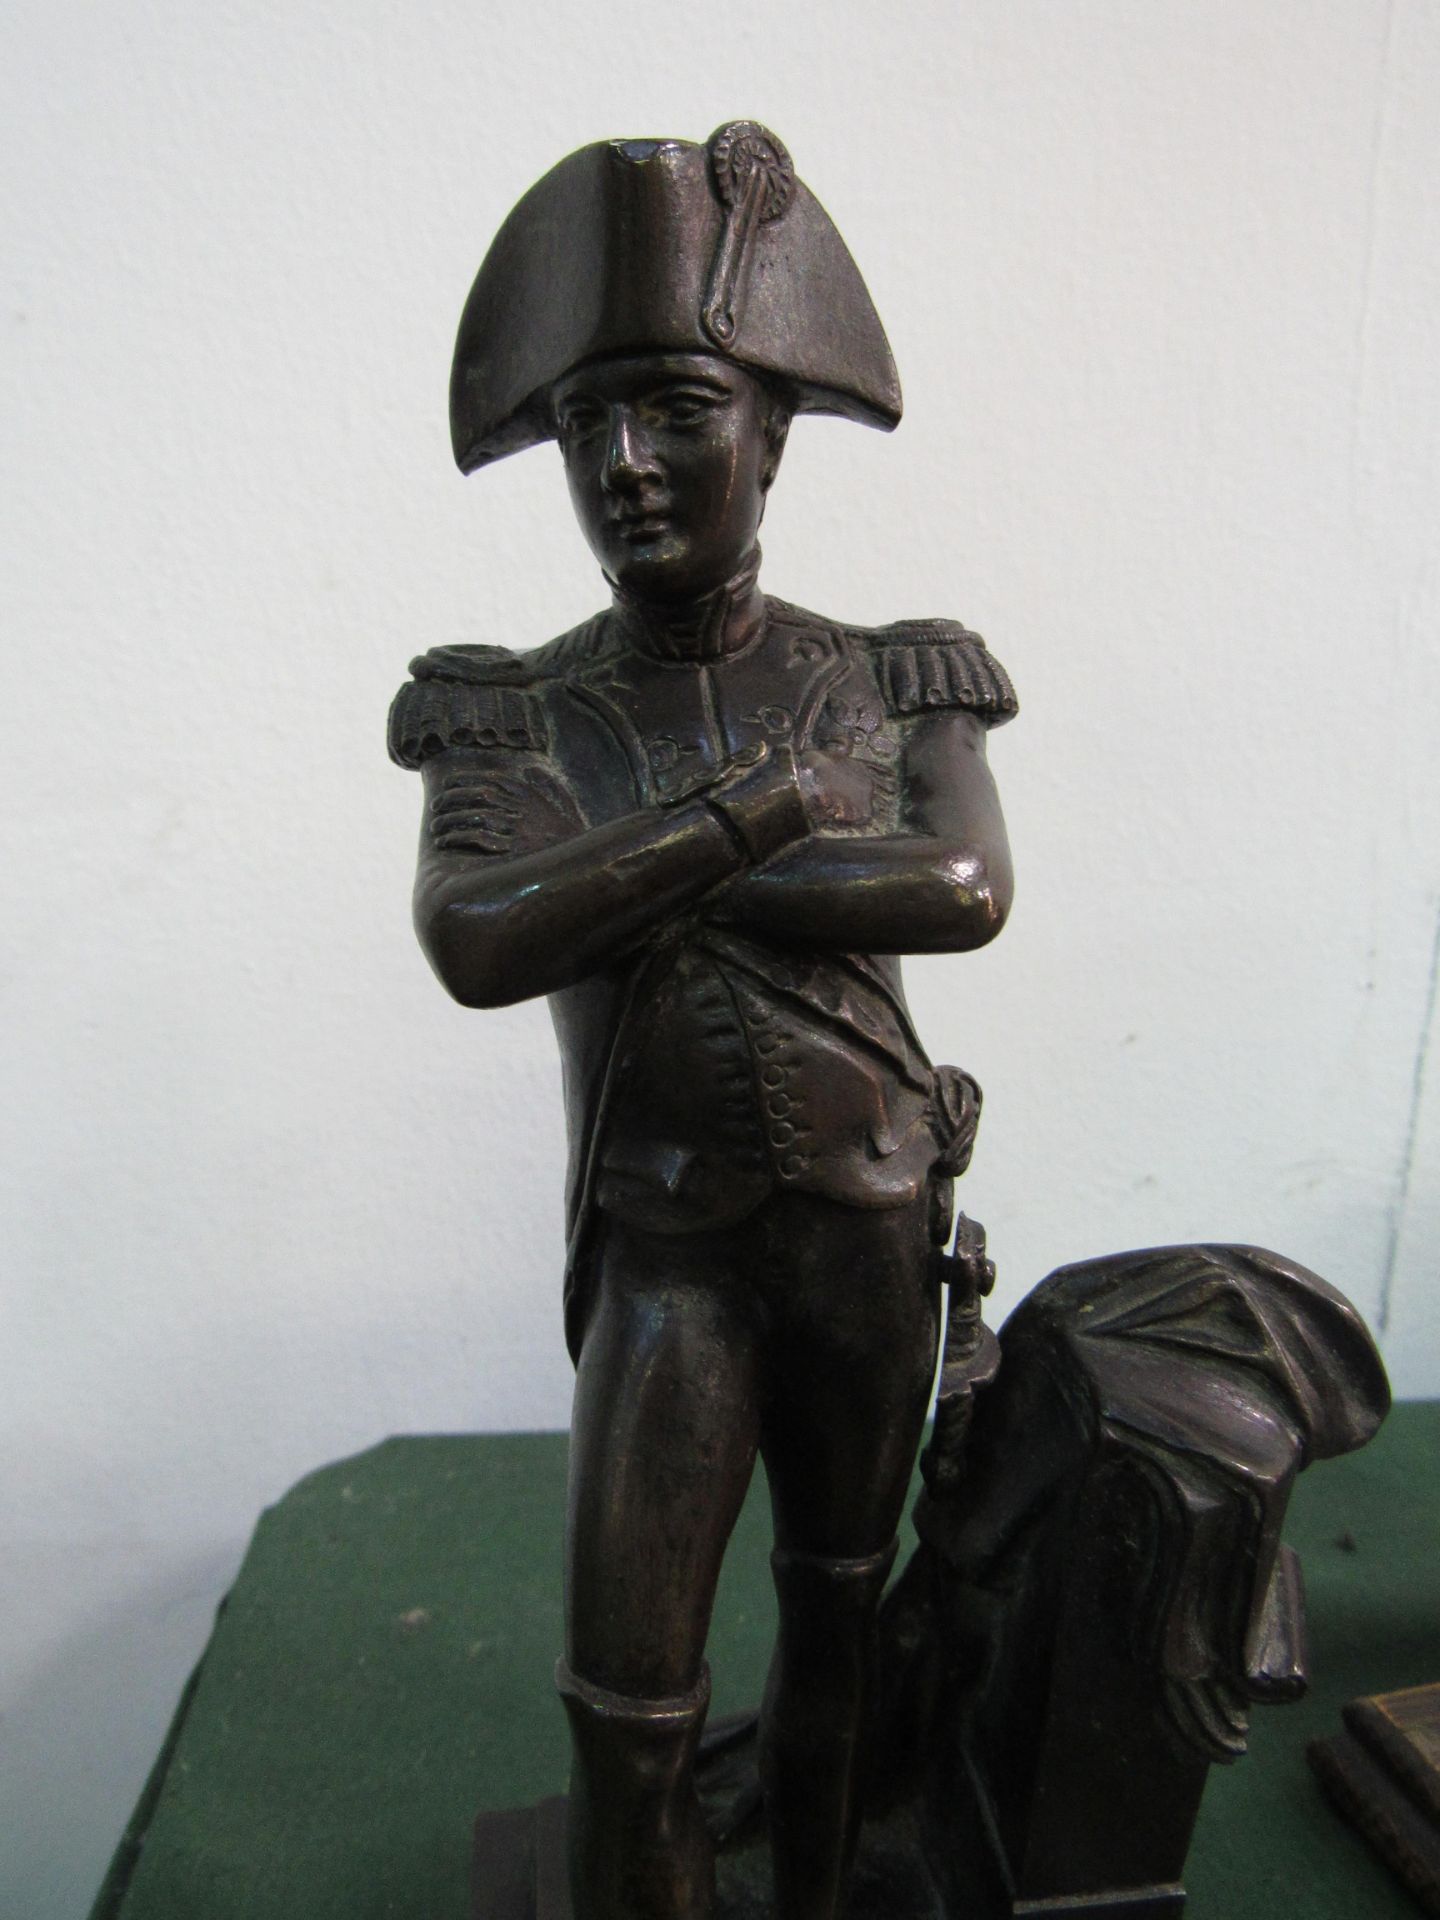 Bronze statuette of a Napoleonic era military figure, height 24cms. Estimate £40-60. - Image 3 of 3